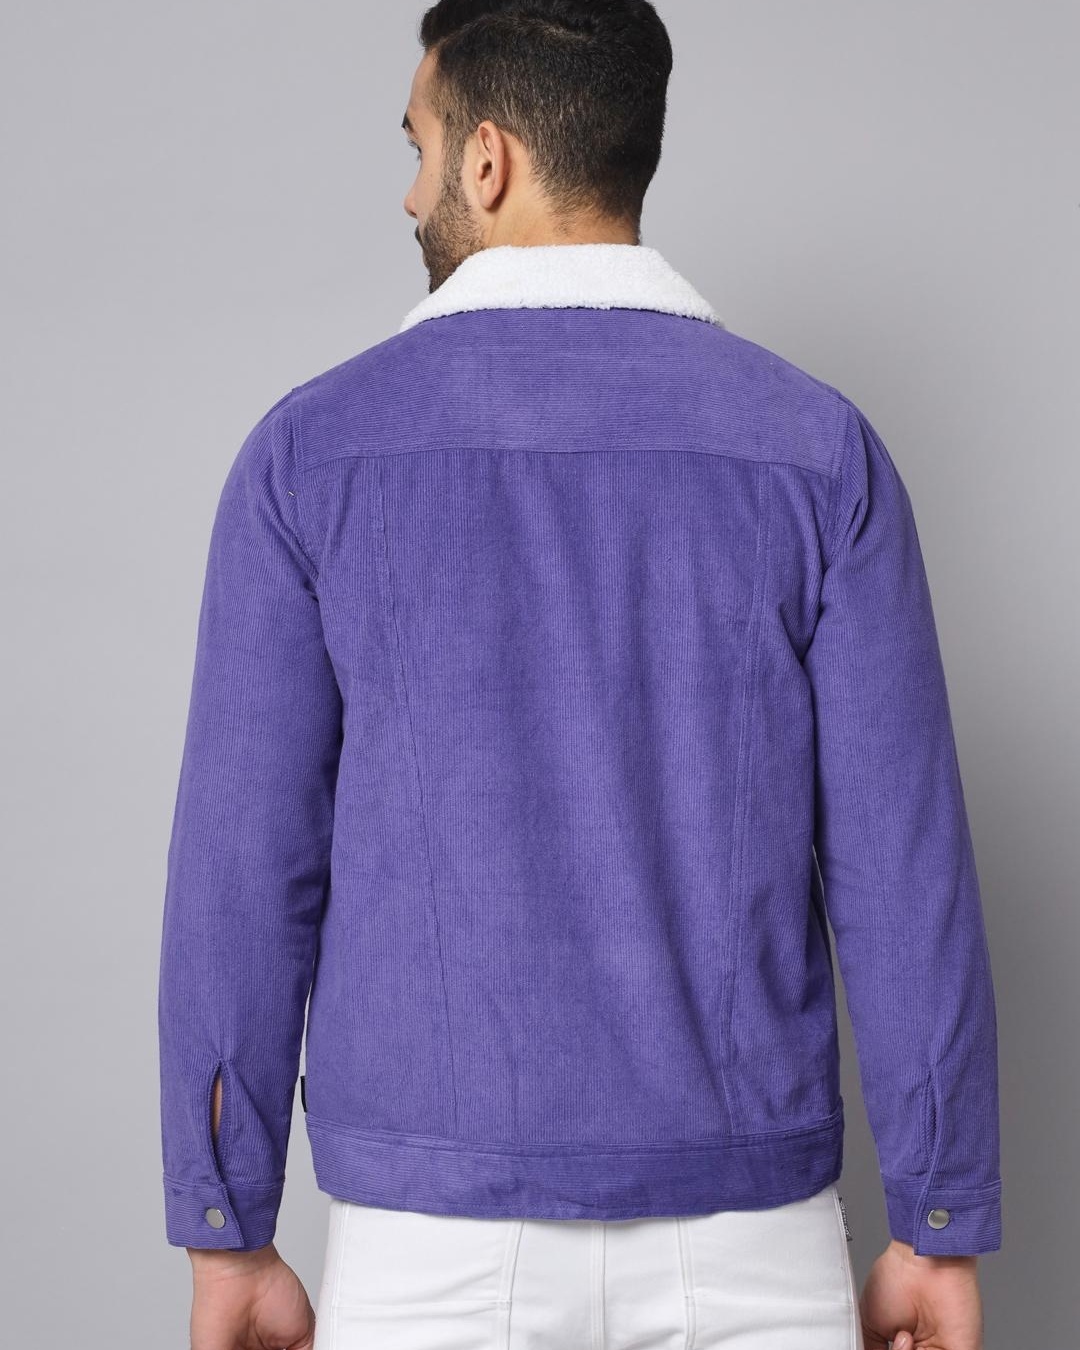 Buy Men's Purple and White Color Block Denim Jacket Online at Bewakoof